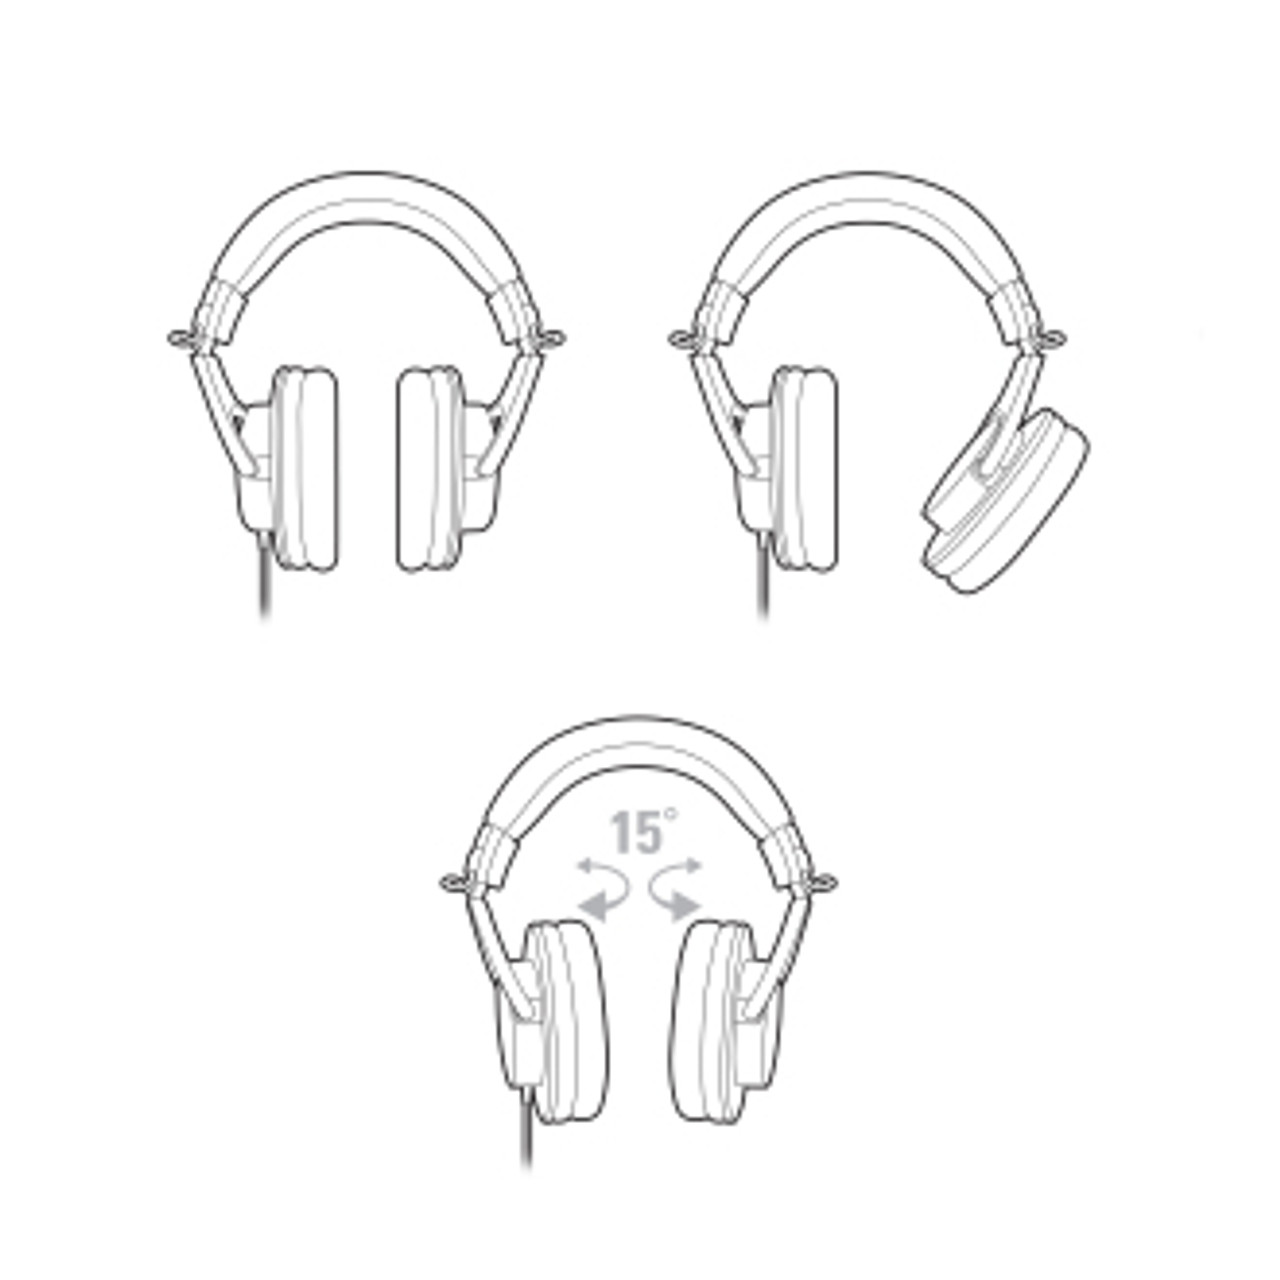 Audio-Technica ATH-M20x Professional Monitor Headphones